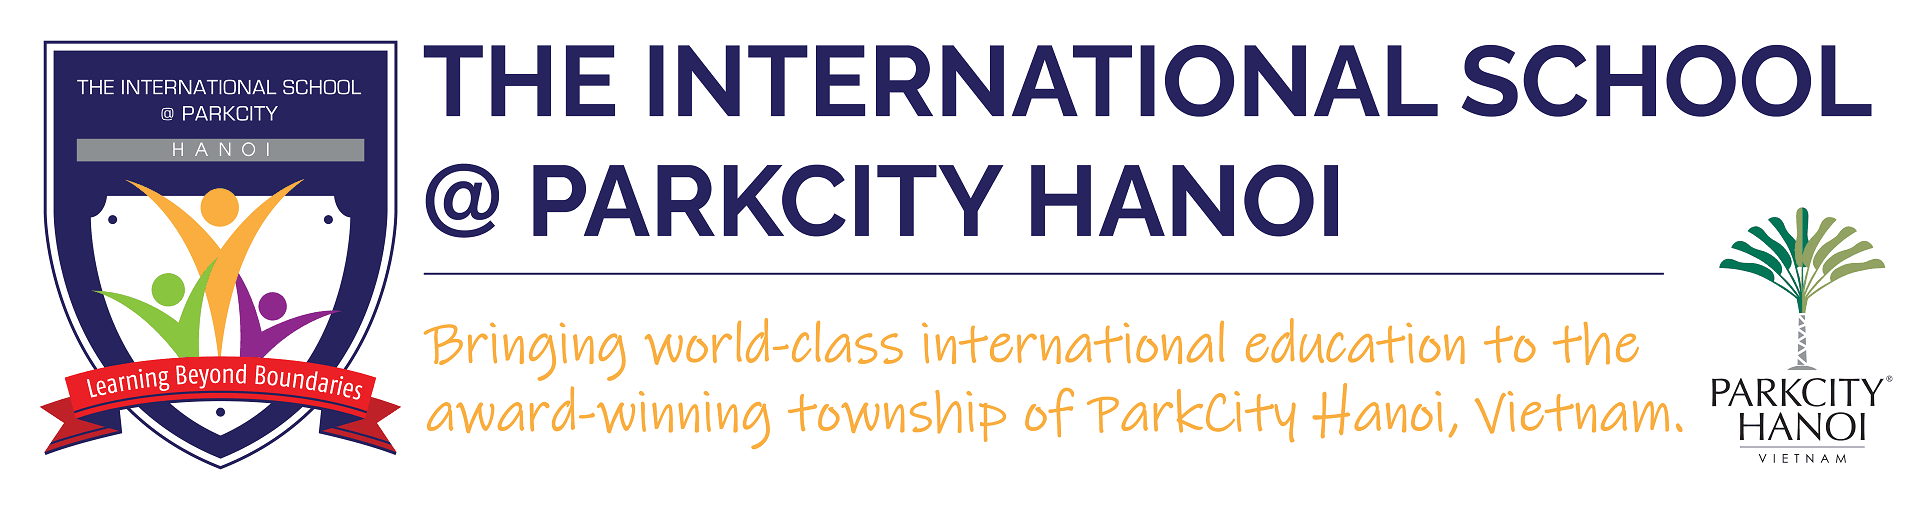 The International School ParkCity Hanoi (ISPH)